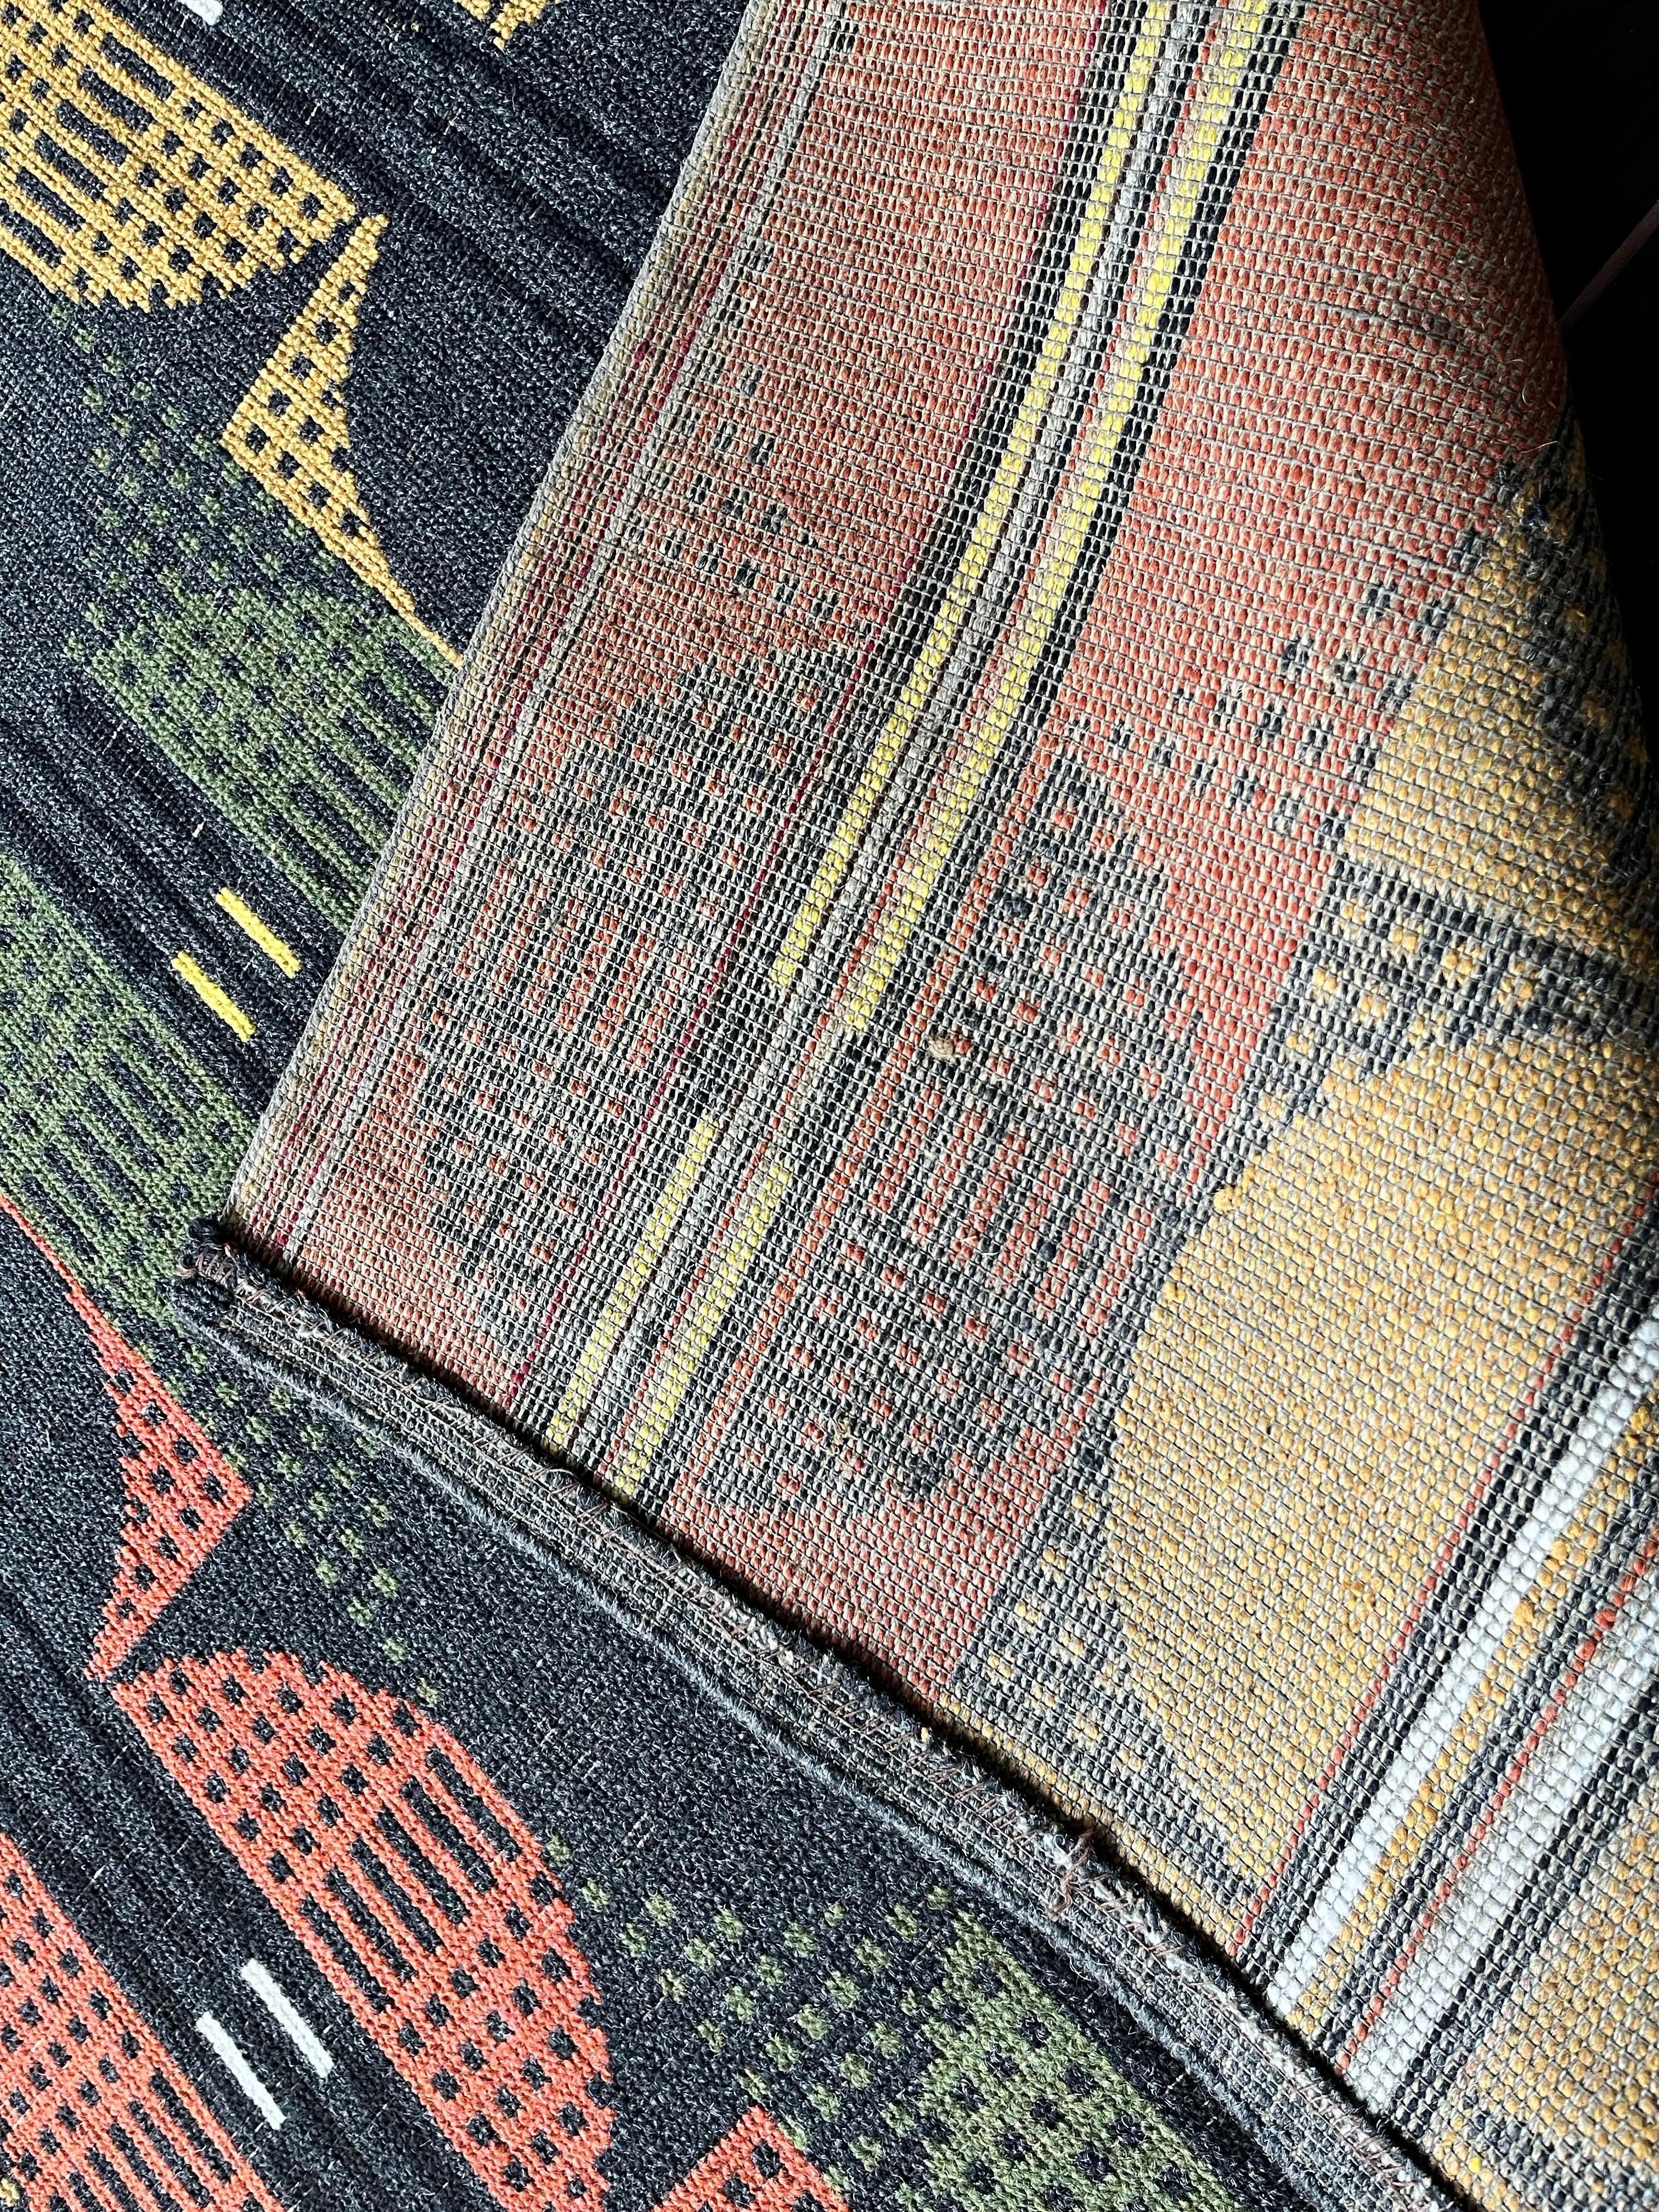 Late 20th Century Midcentury Design Geometric Rug / Carpet, 1970s / Czechoslovakia For Sale